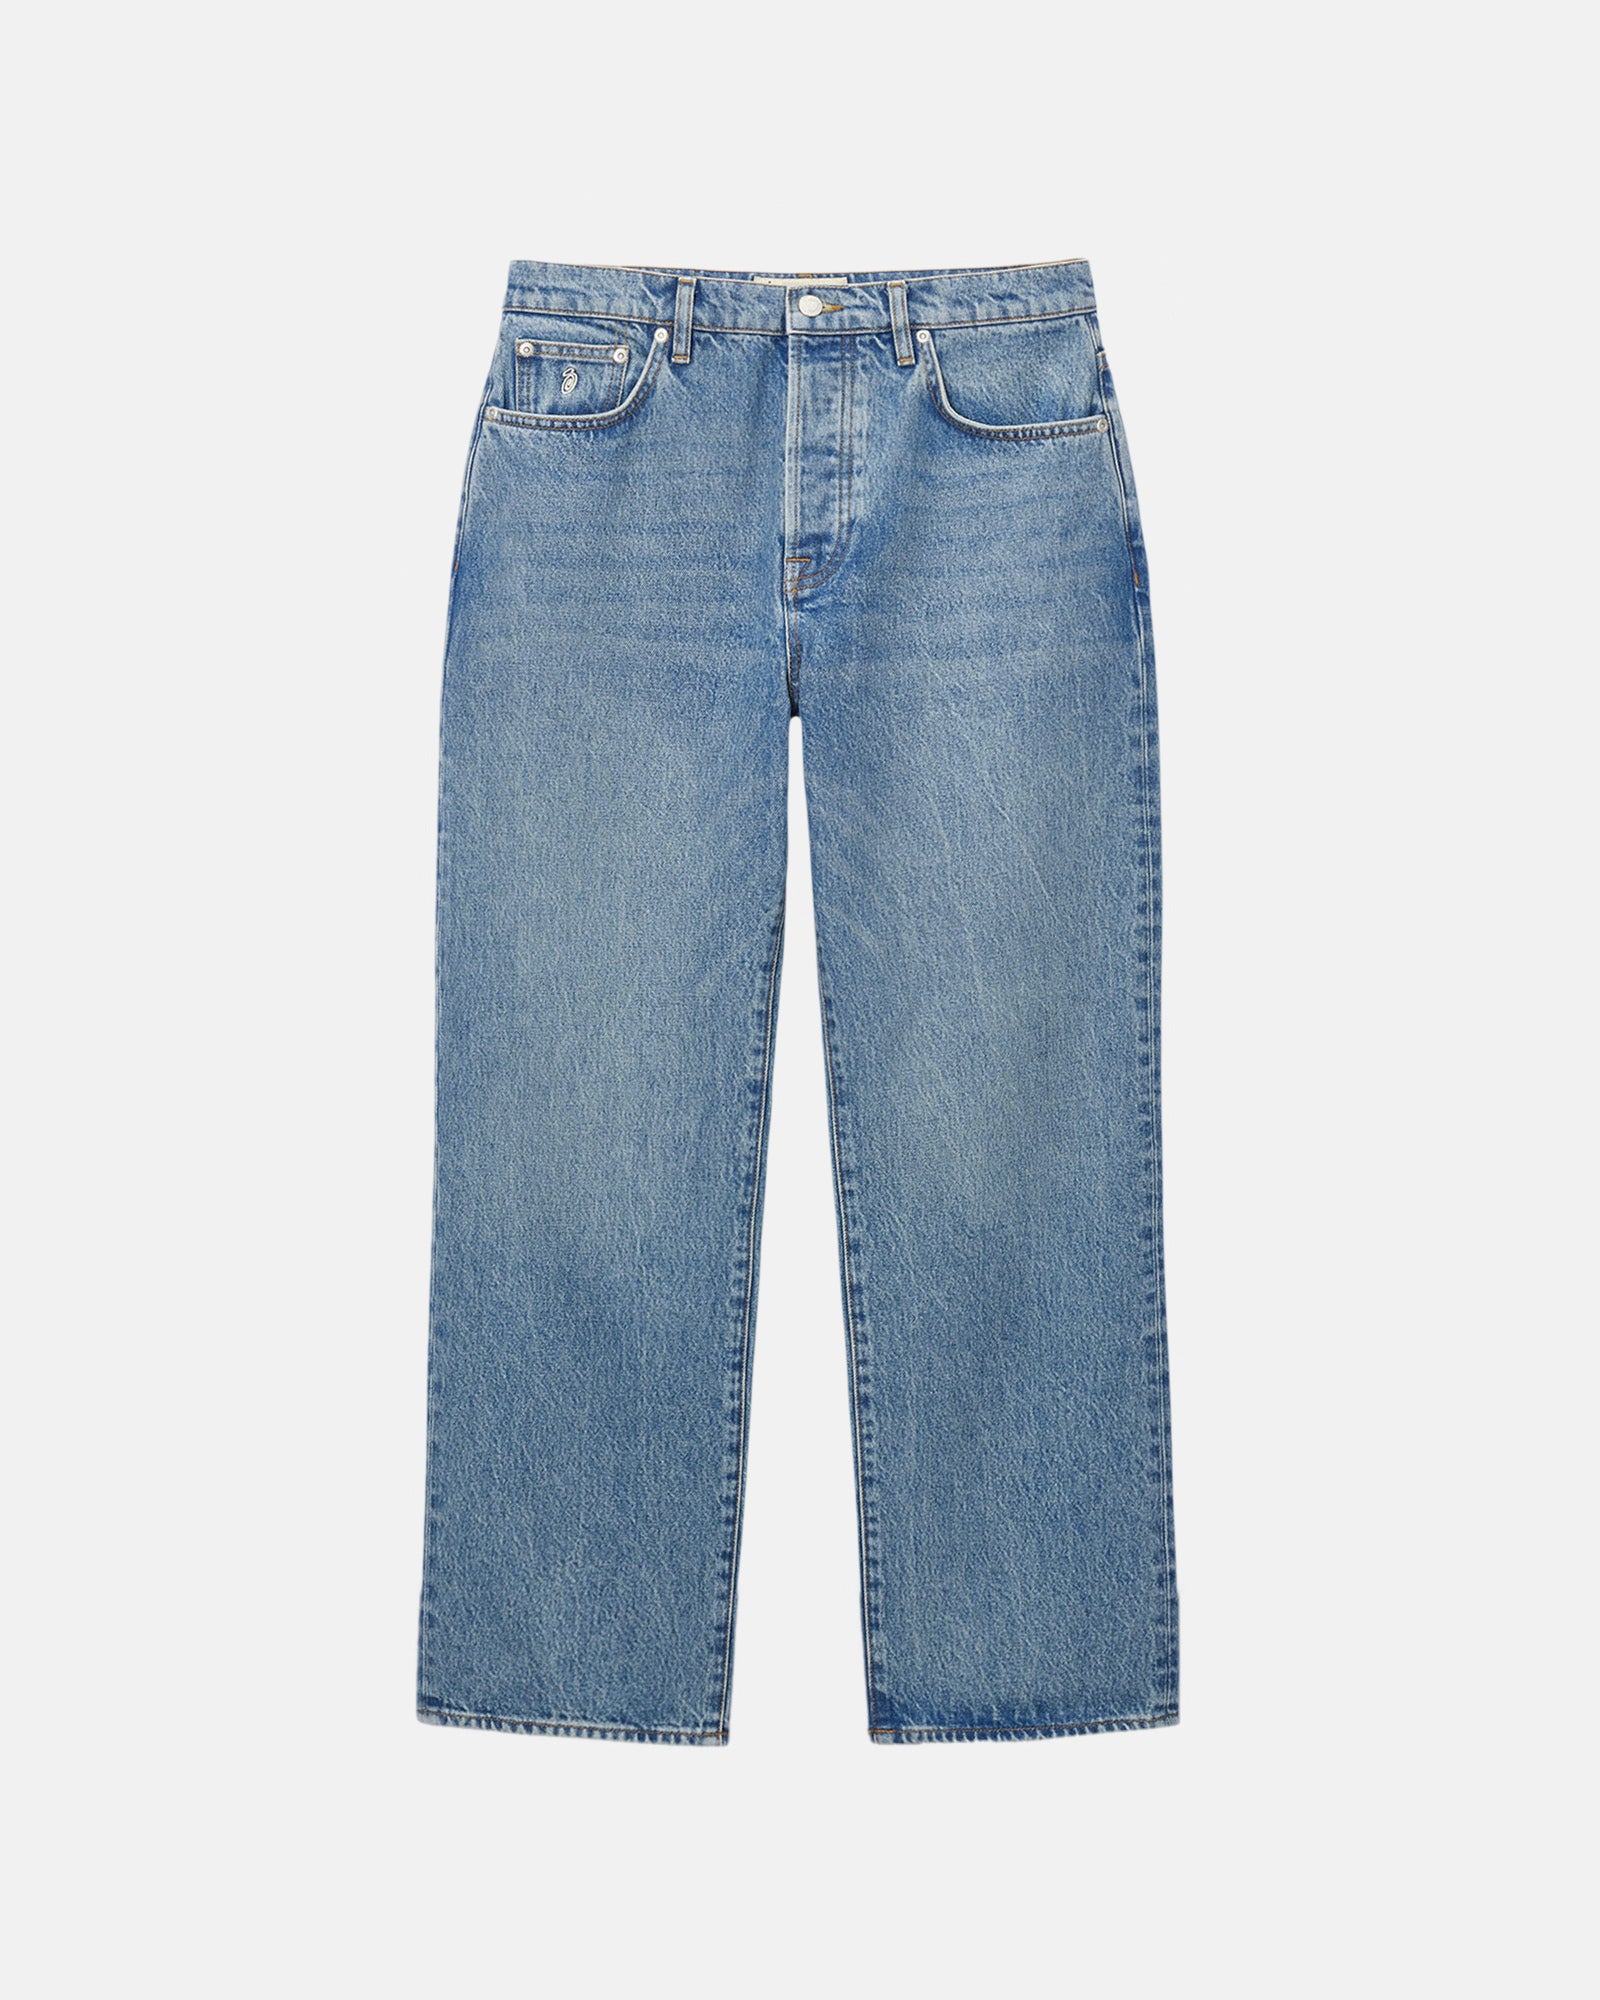 Stüssy Classic Jean Denim Washed Blue Pants